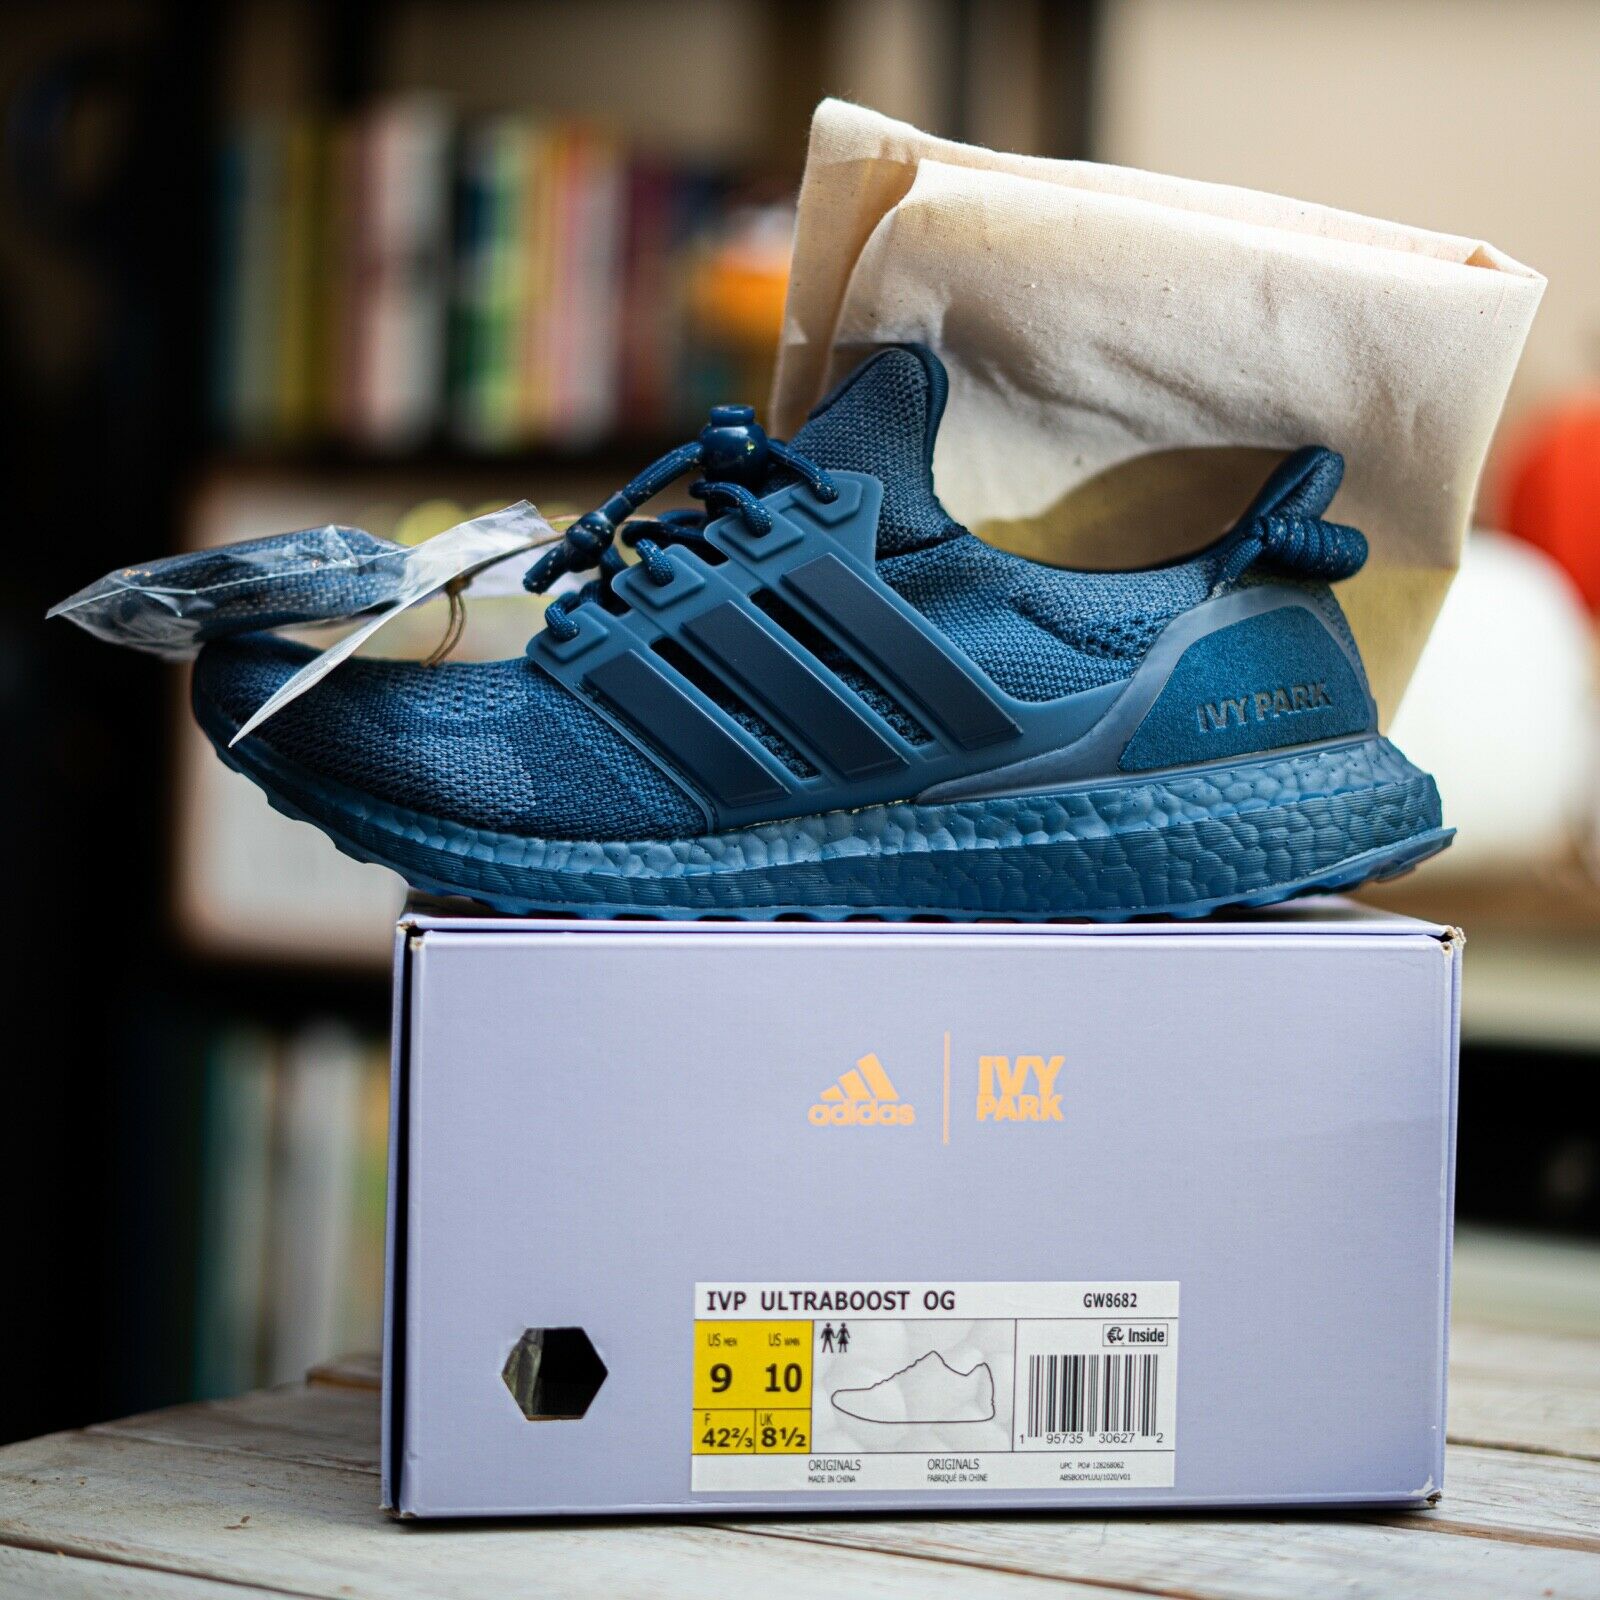 Adidas x IVP Ultraboost OG - Blue / GW8682 / Running Shoes Sneakers